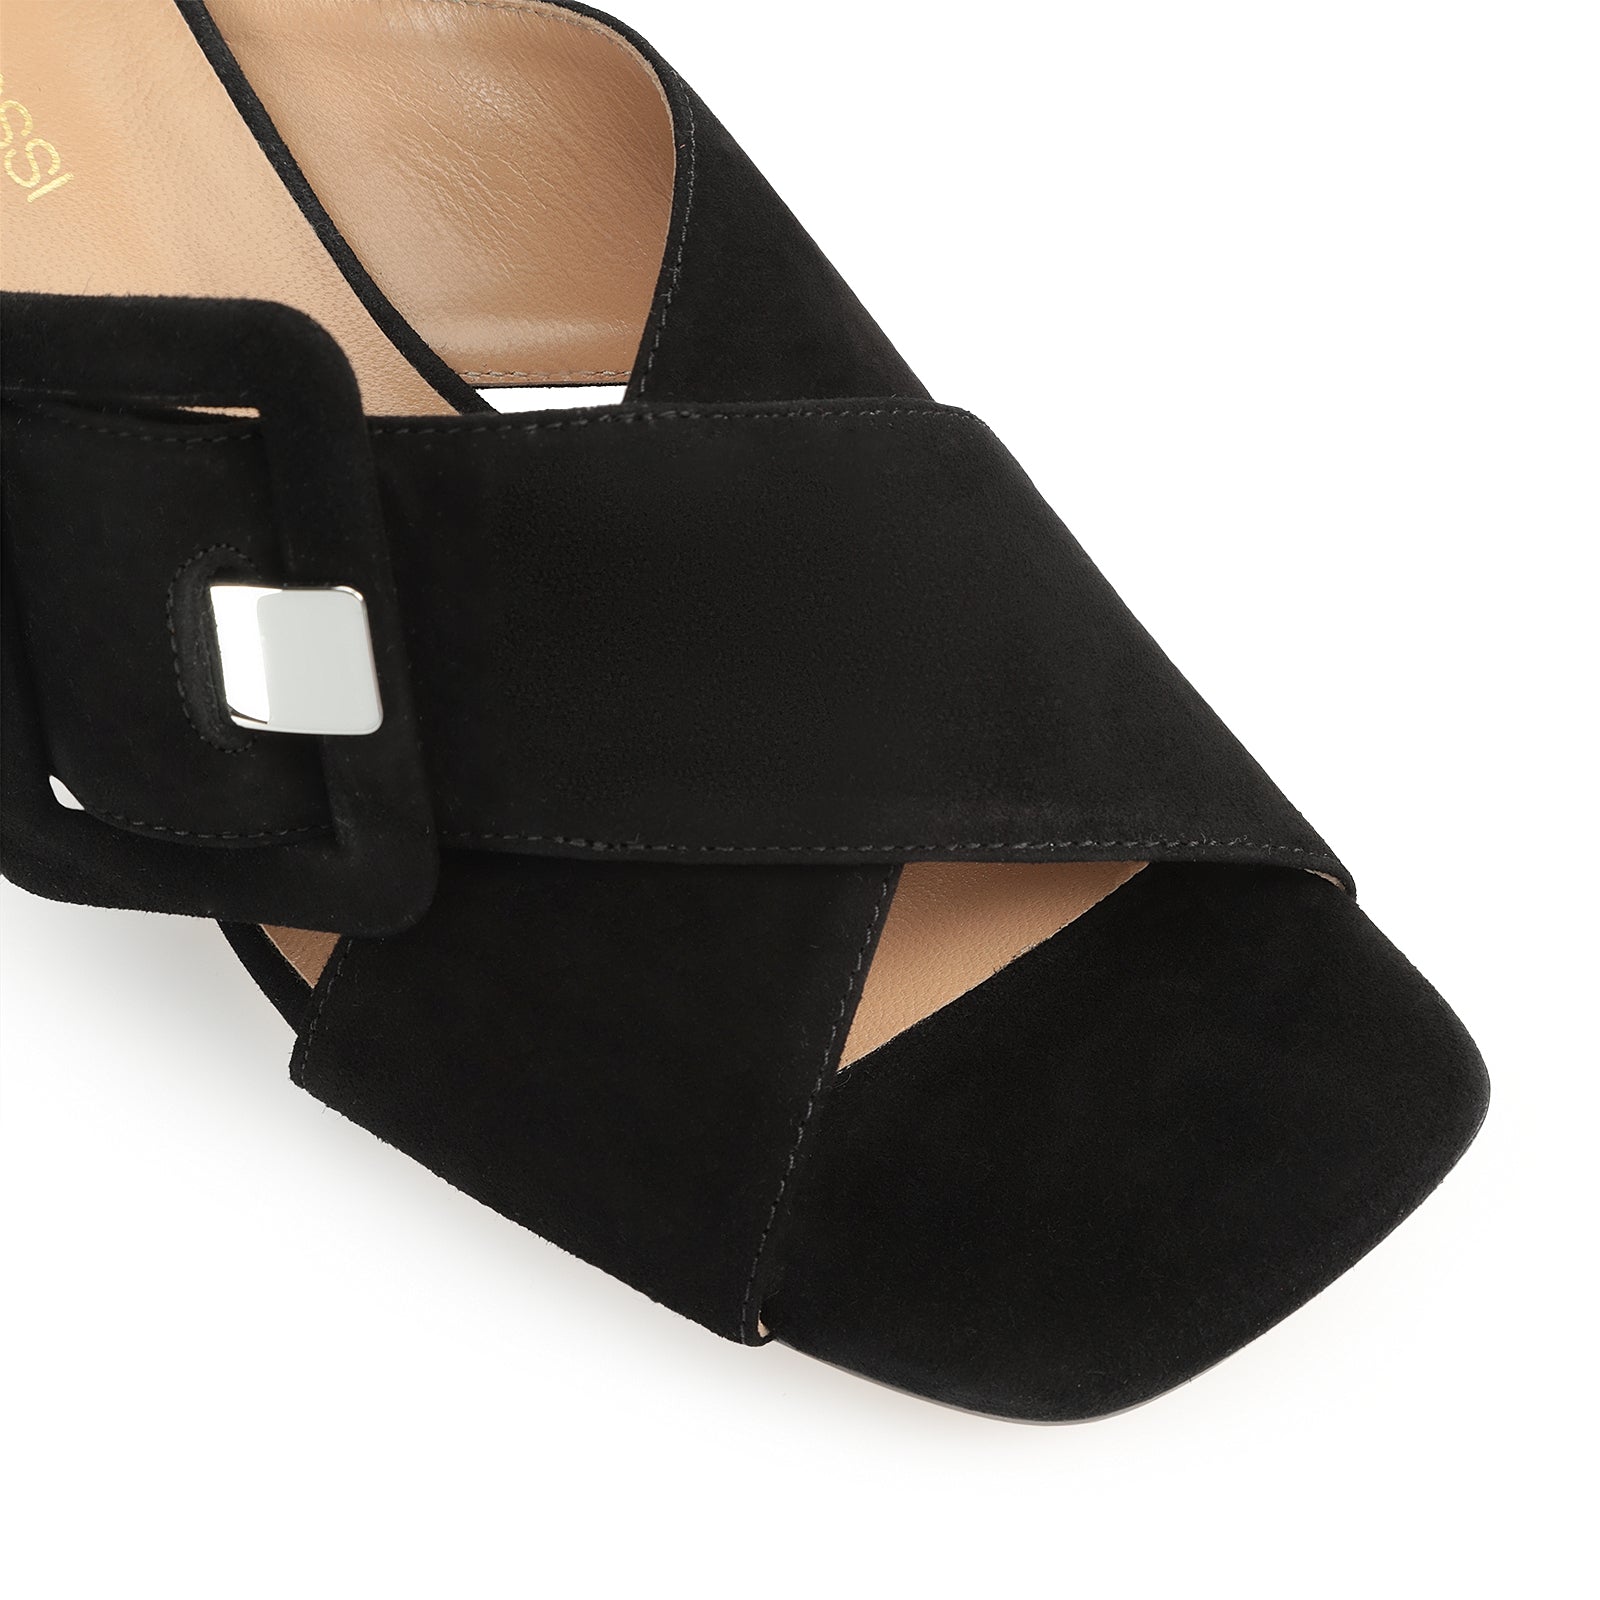 Sr Mia 45 heeled sandals - Nero